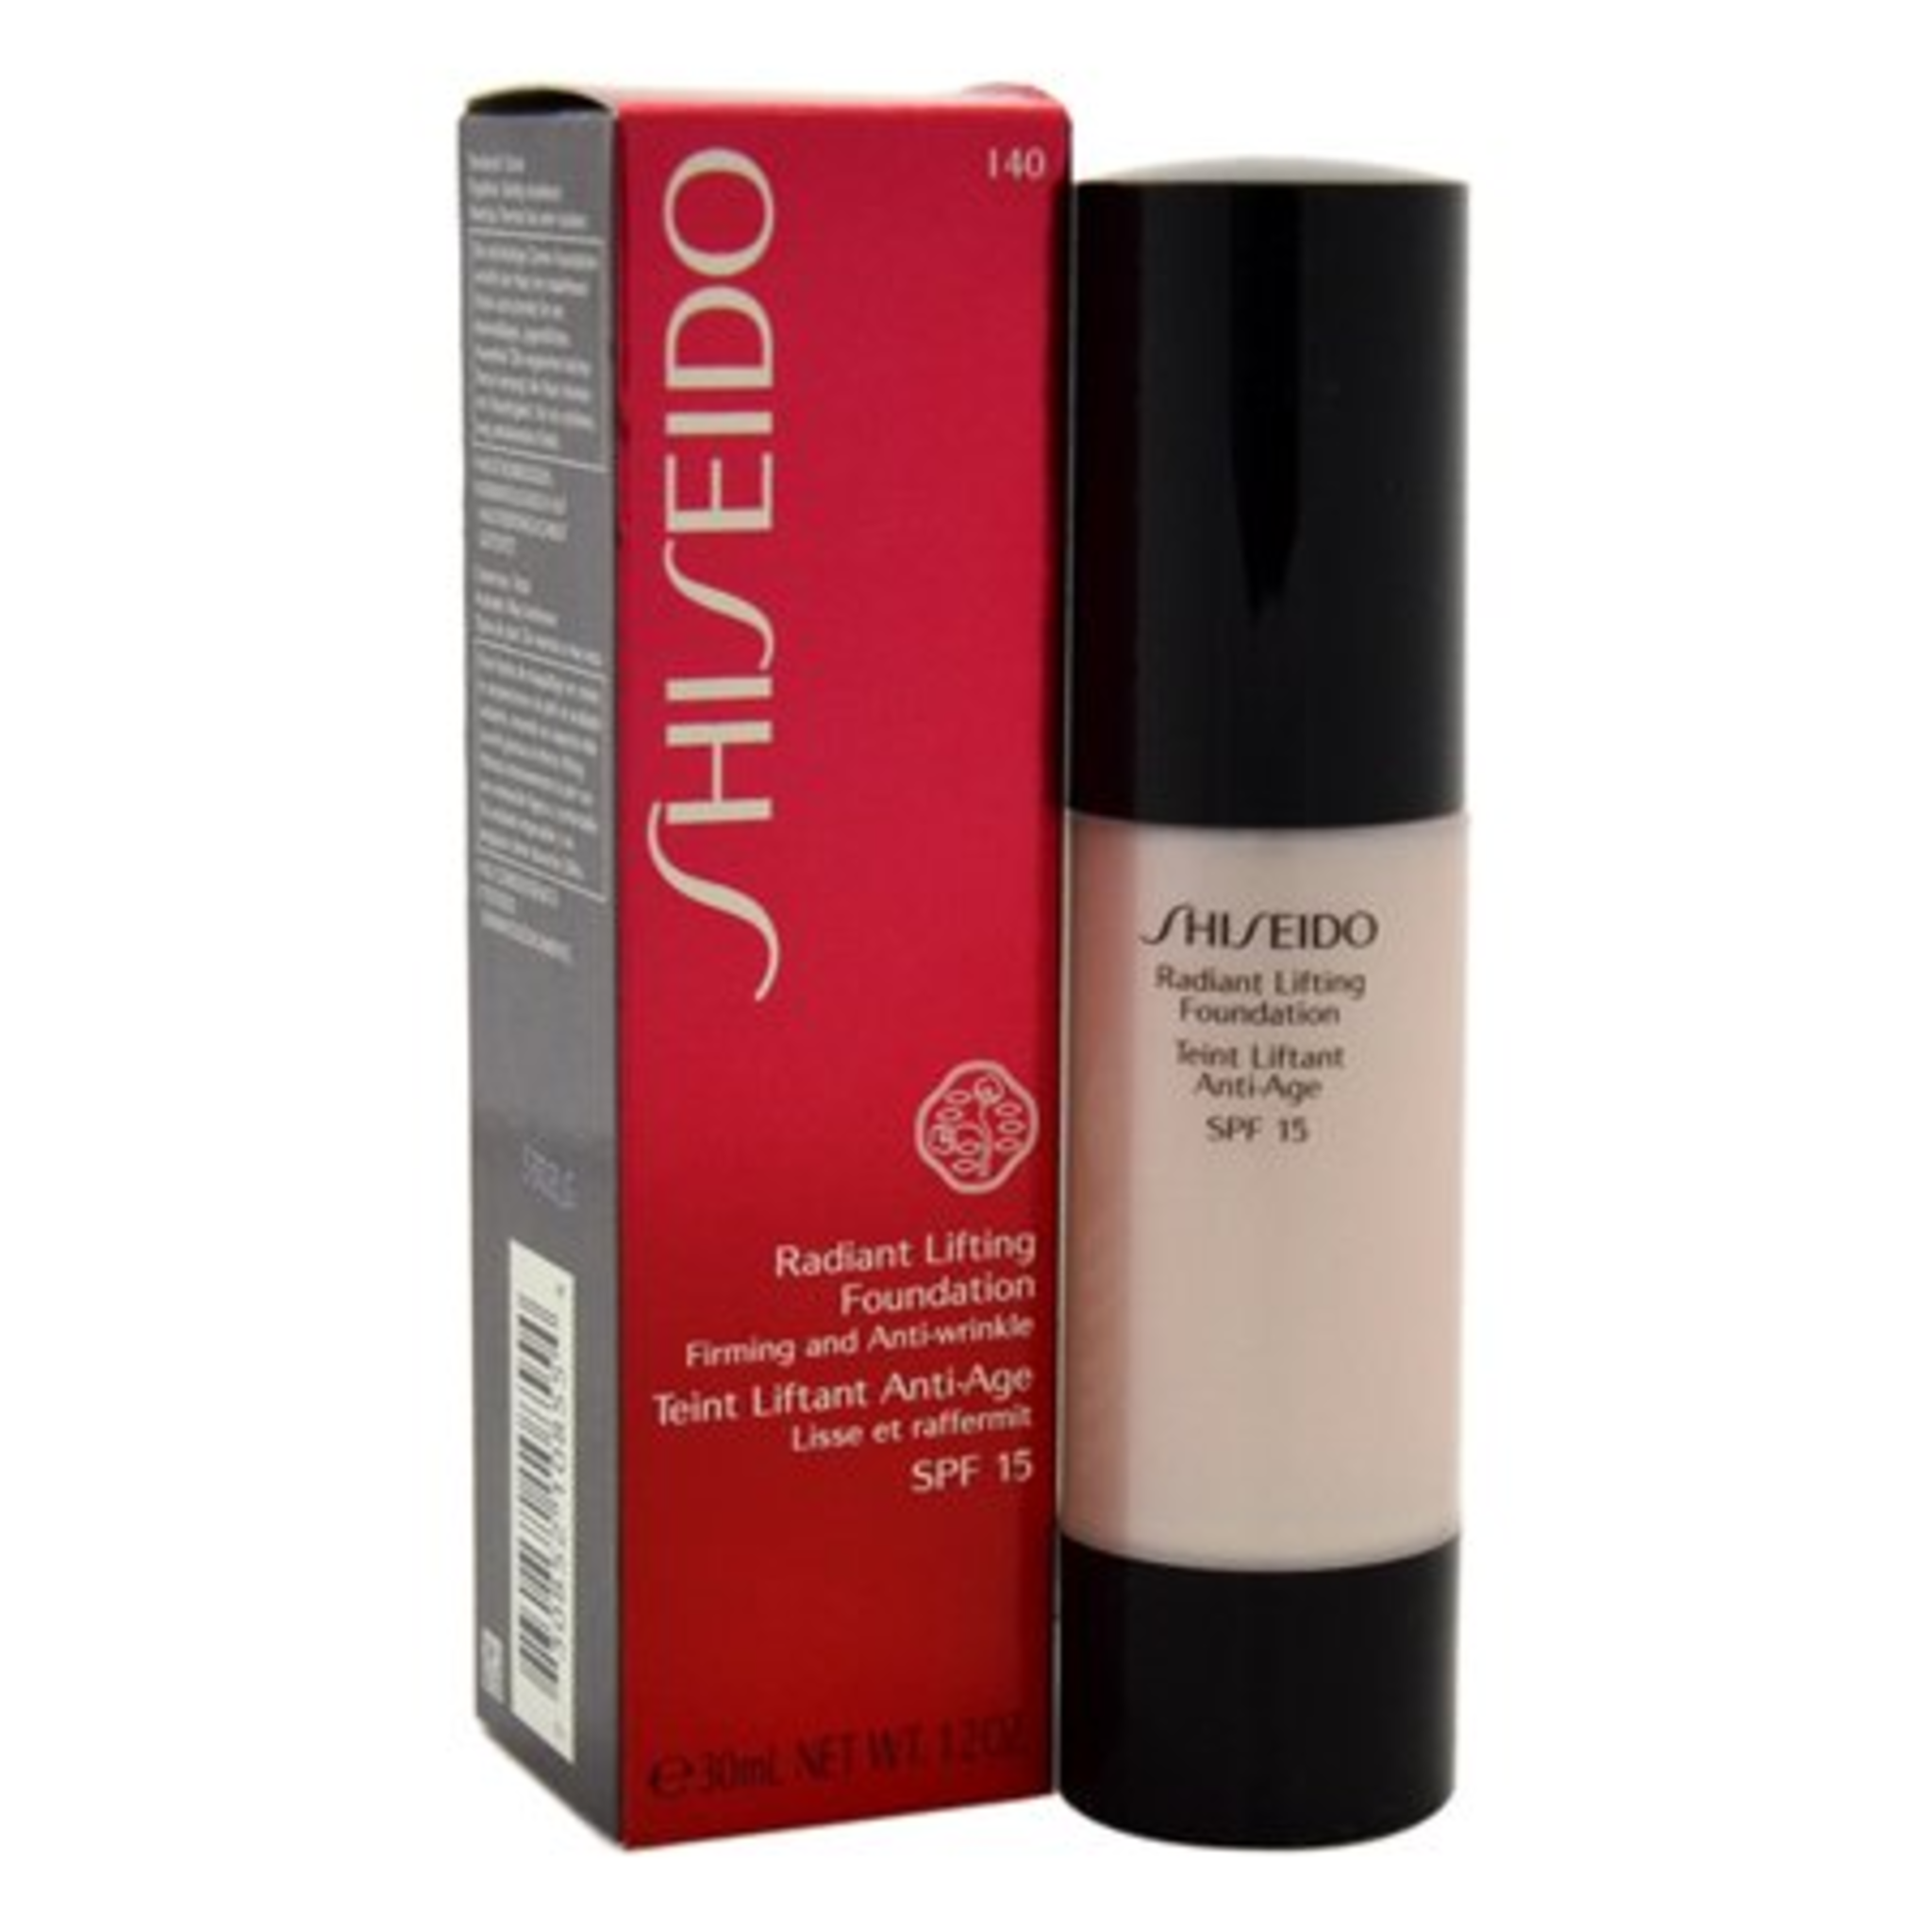 Shiseido de. Shiseido - Radiant Lifting Foundation i40 natural Fair. Тональный крем Shiseido Radiant. Шисейдо Радиант лифтинг. Шисейдо Радиант лифтинг тональный крем.